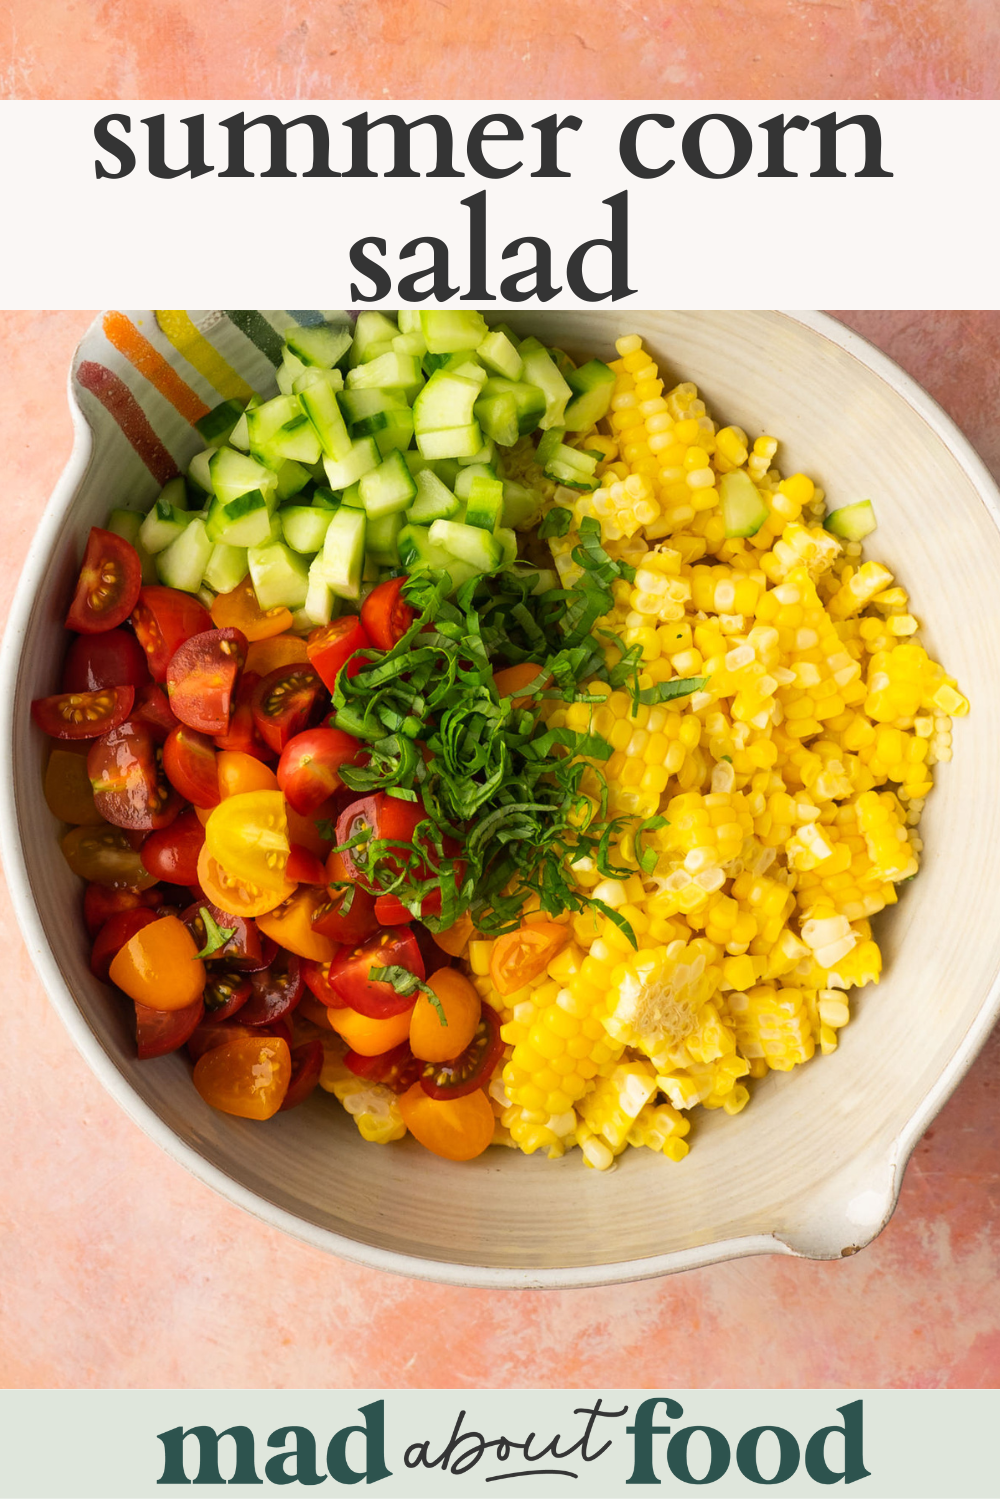 Image for pinning Summer Corn Salad on Pinterest